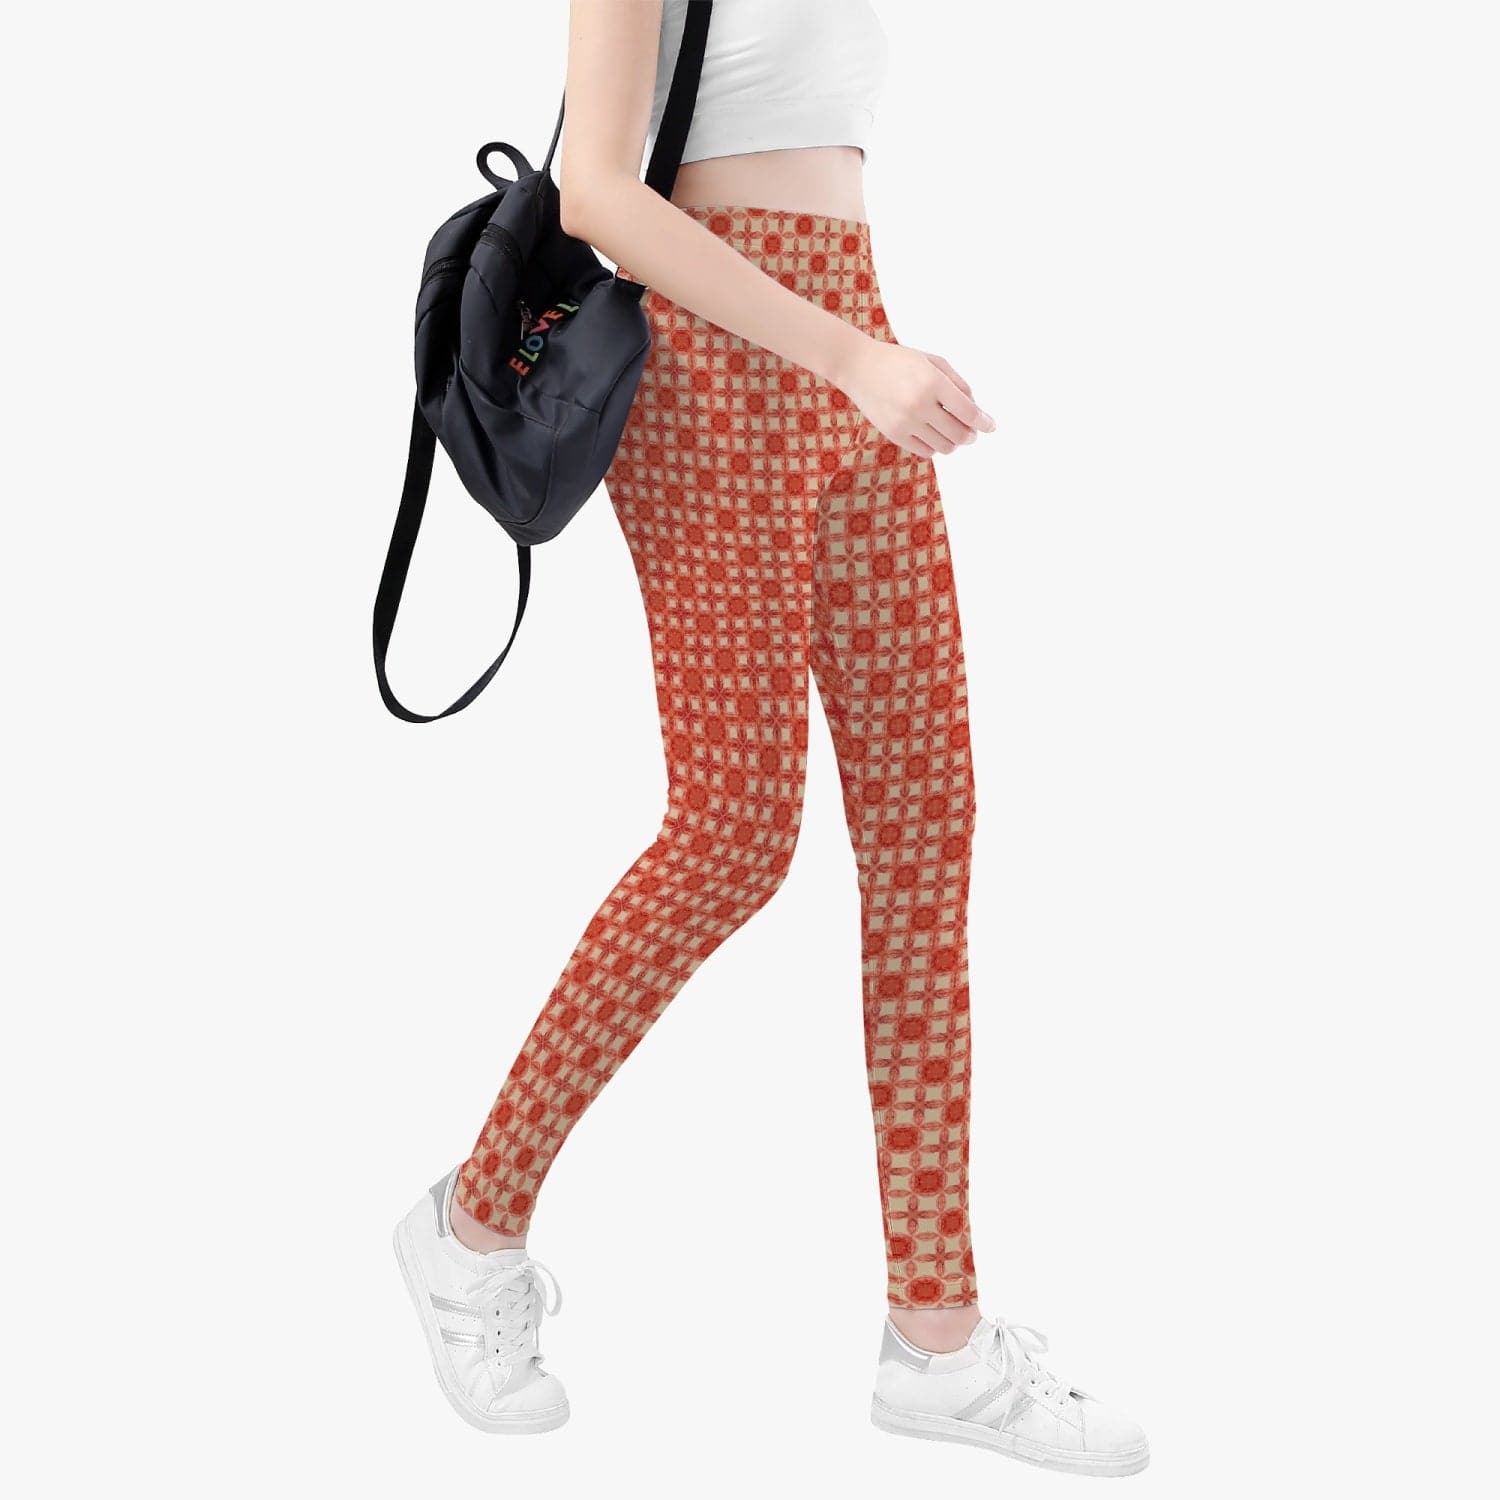 Soft Red Buttercup Yoga Pants/Leggins by Sensus Studio Design